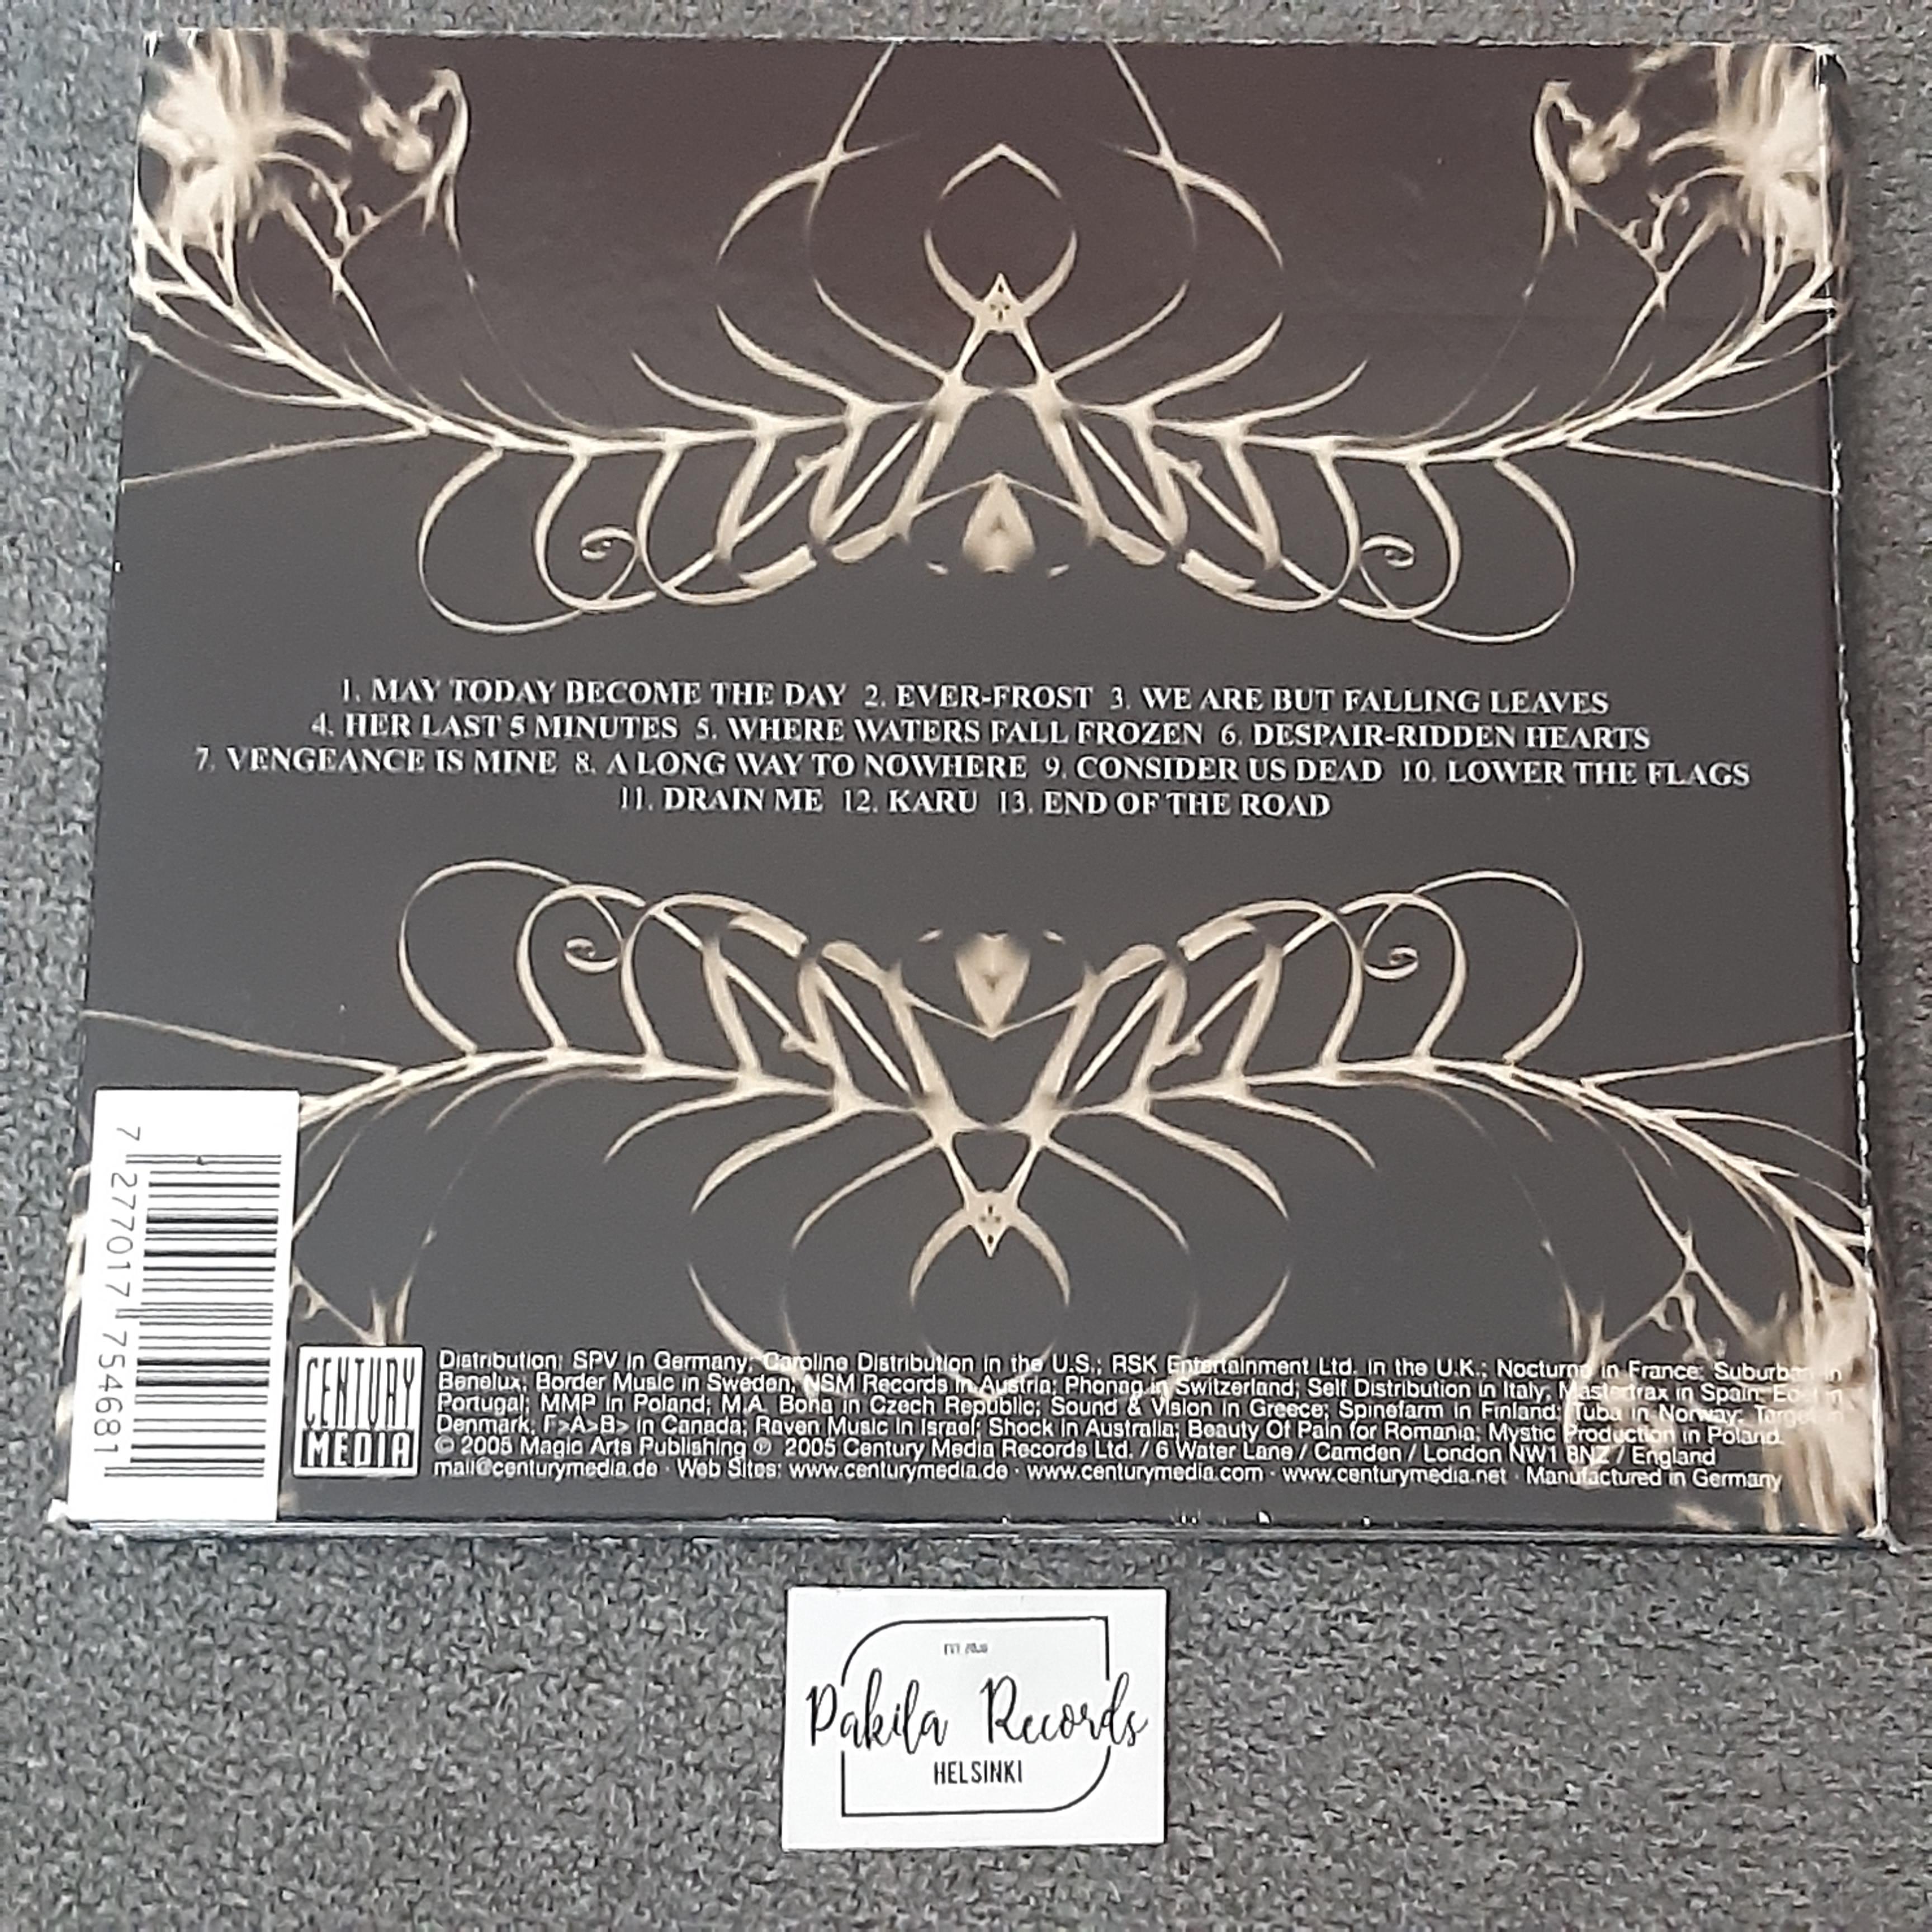 Sentenced - The Funeral Album - CD (käytetty)